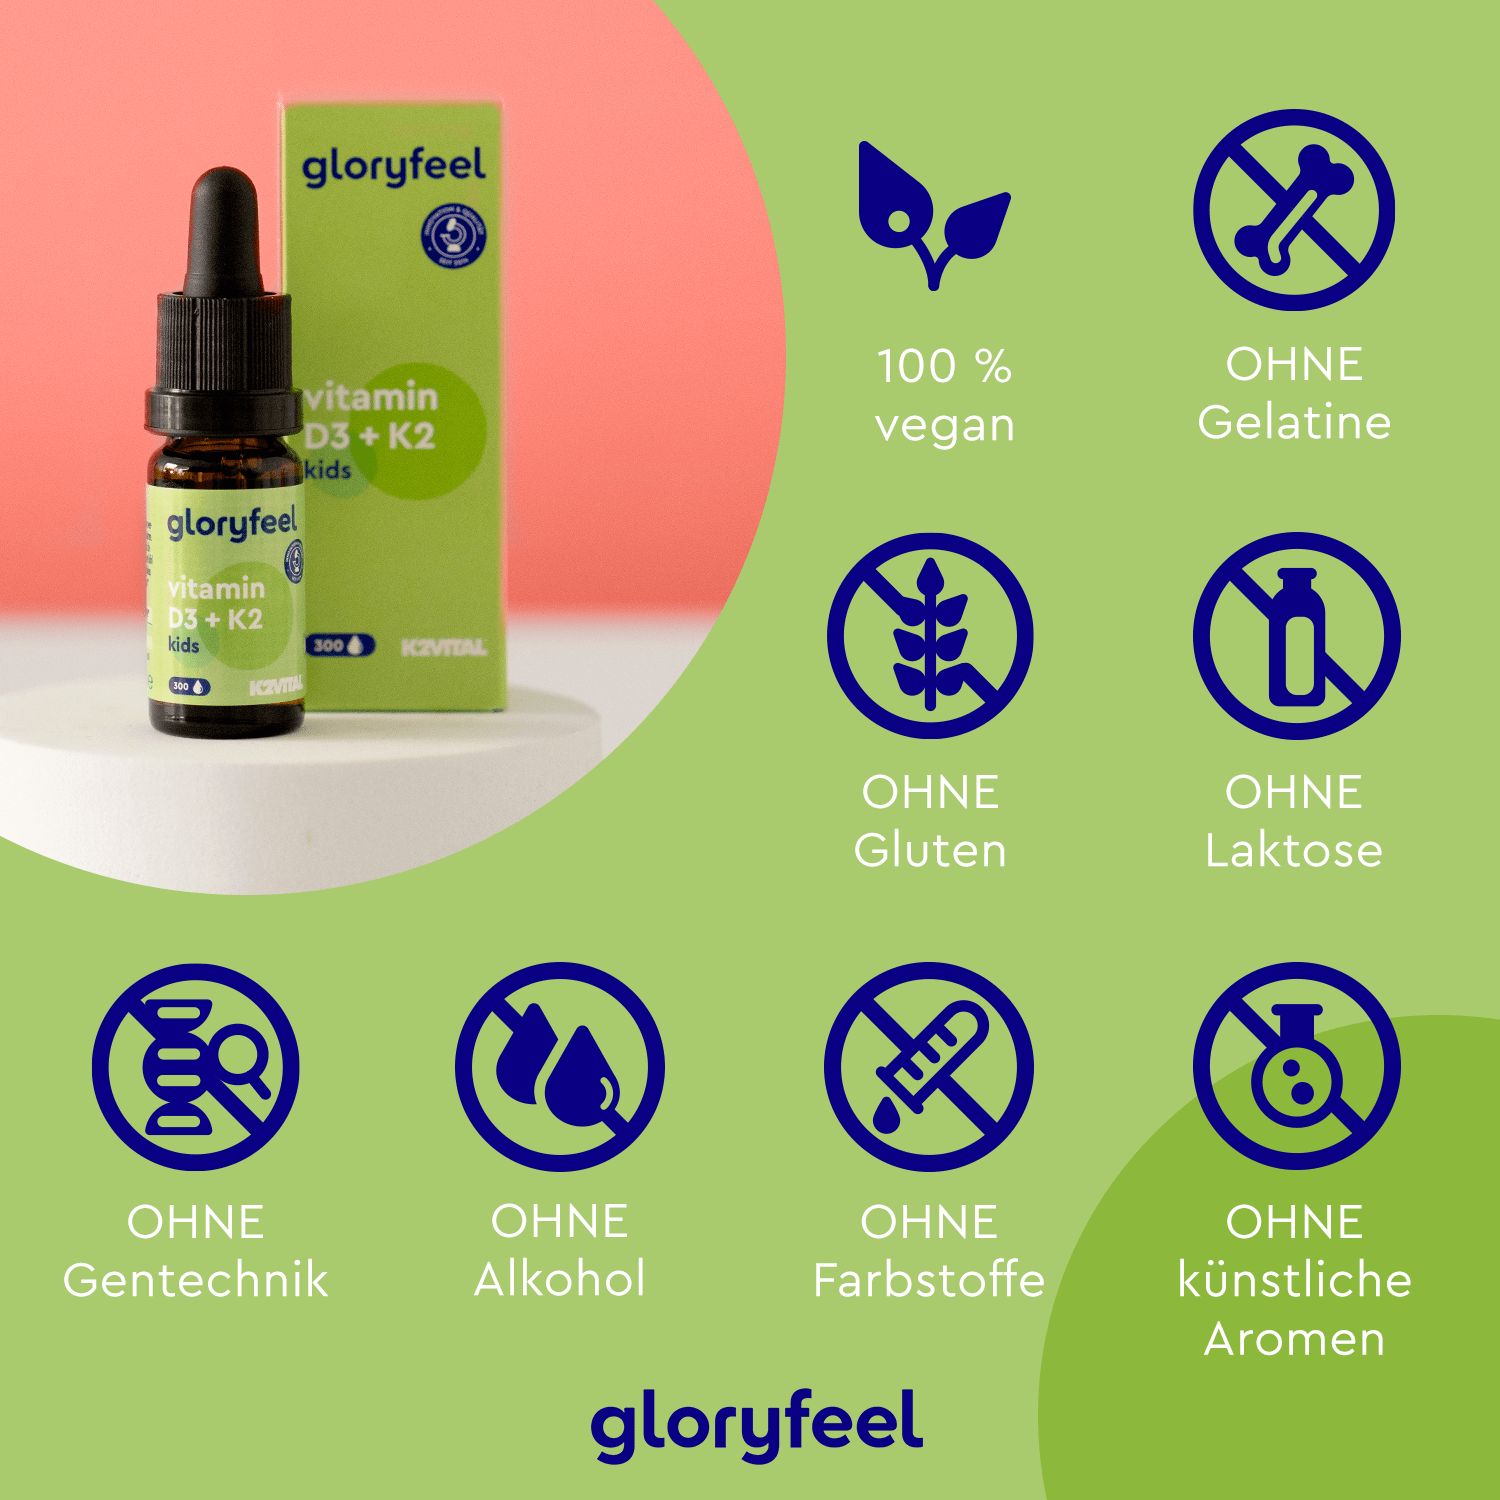 gloryfeel® Vitamin D3 + K2 500 I.E Tropfen Kids